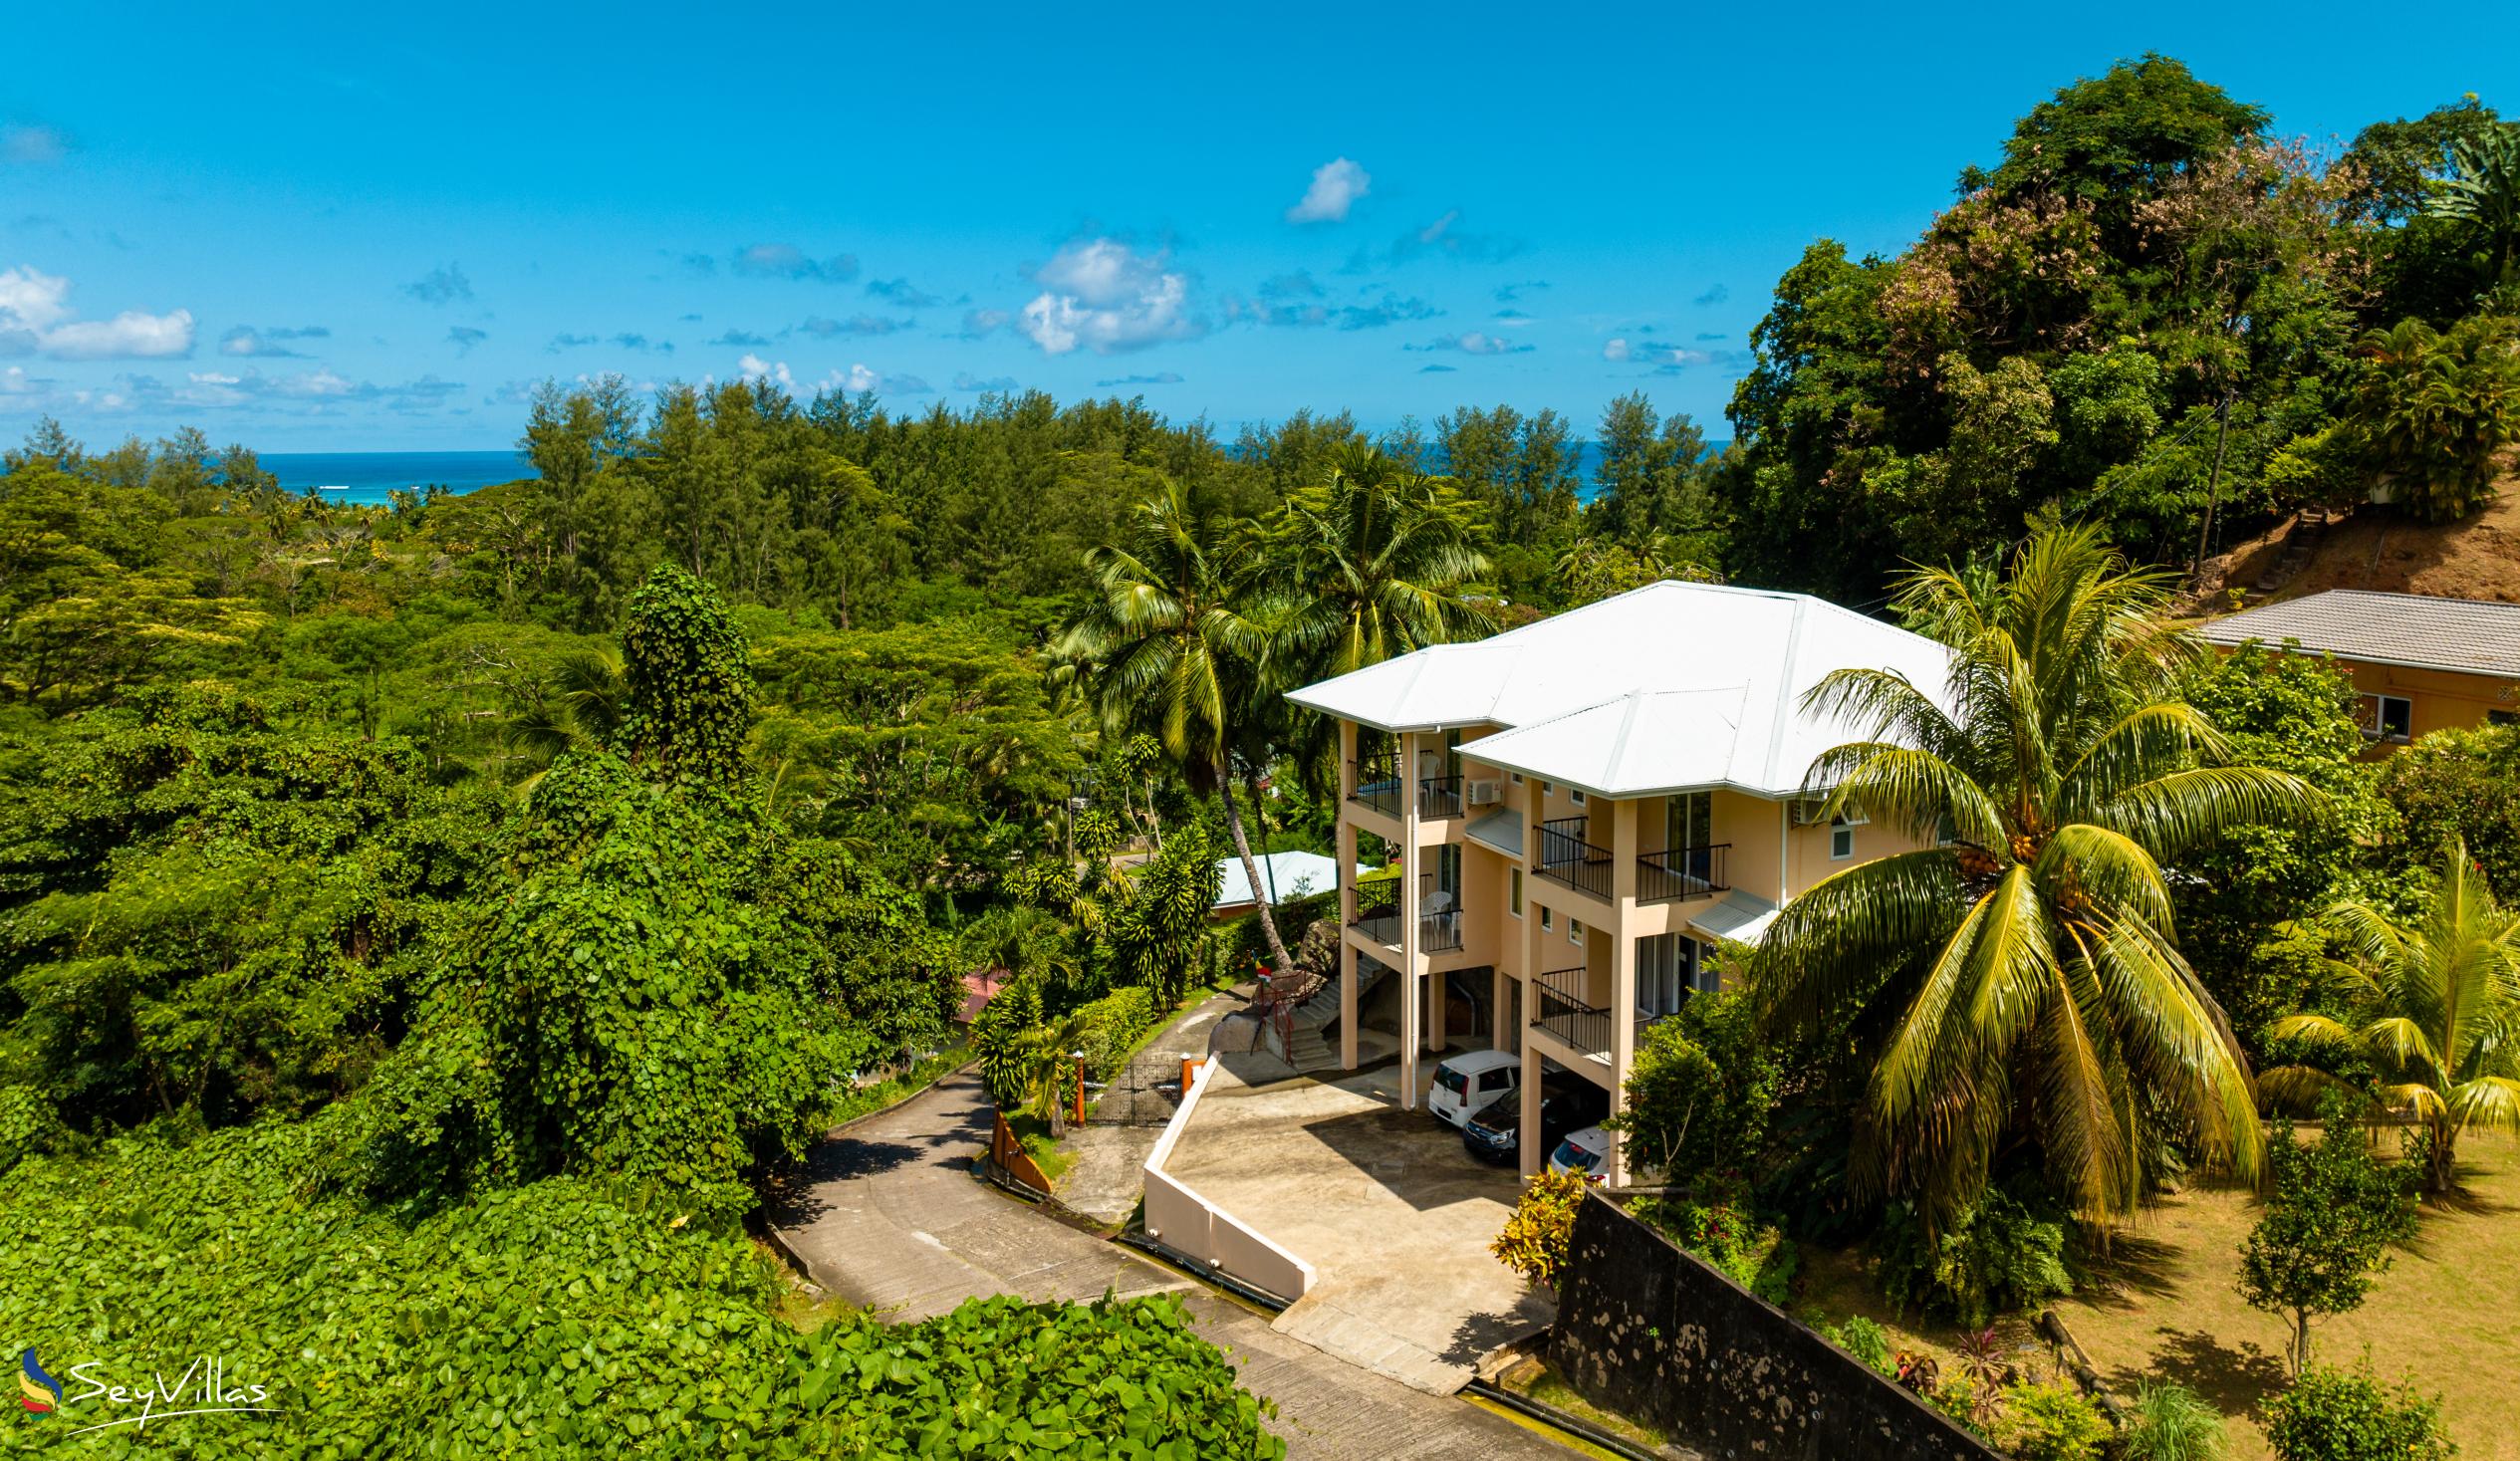 Photo 2: JAIDSS Holiday Apartments - Outdoor area - Mahé (Seychelles)